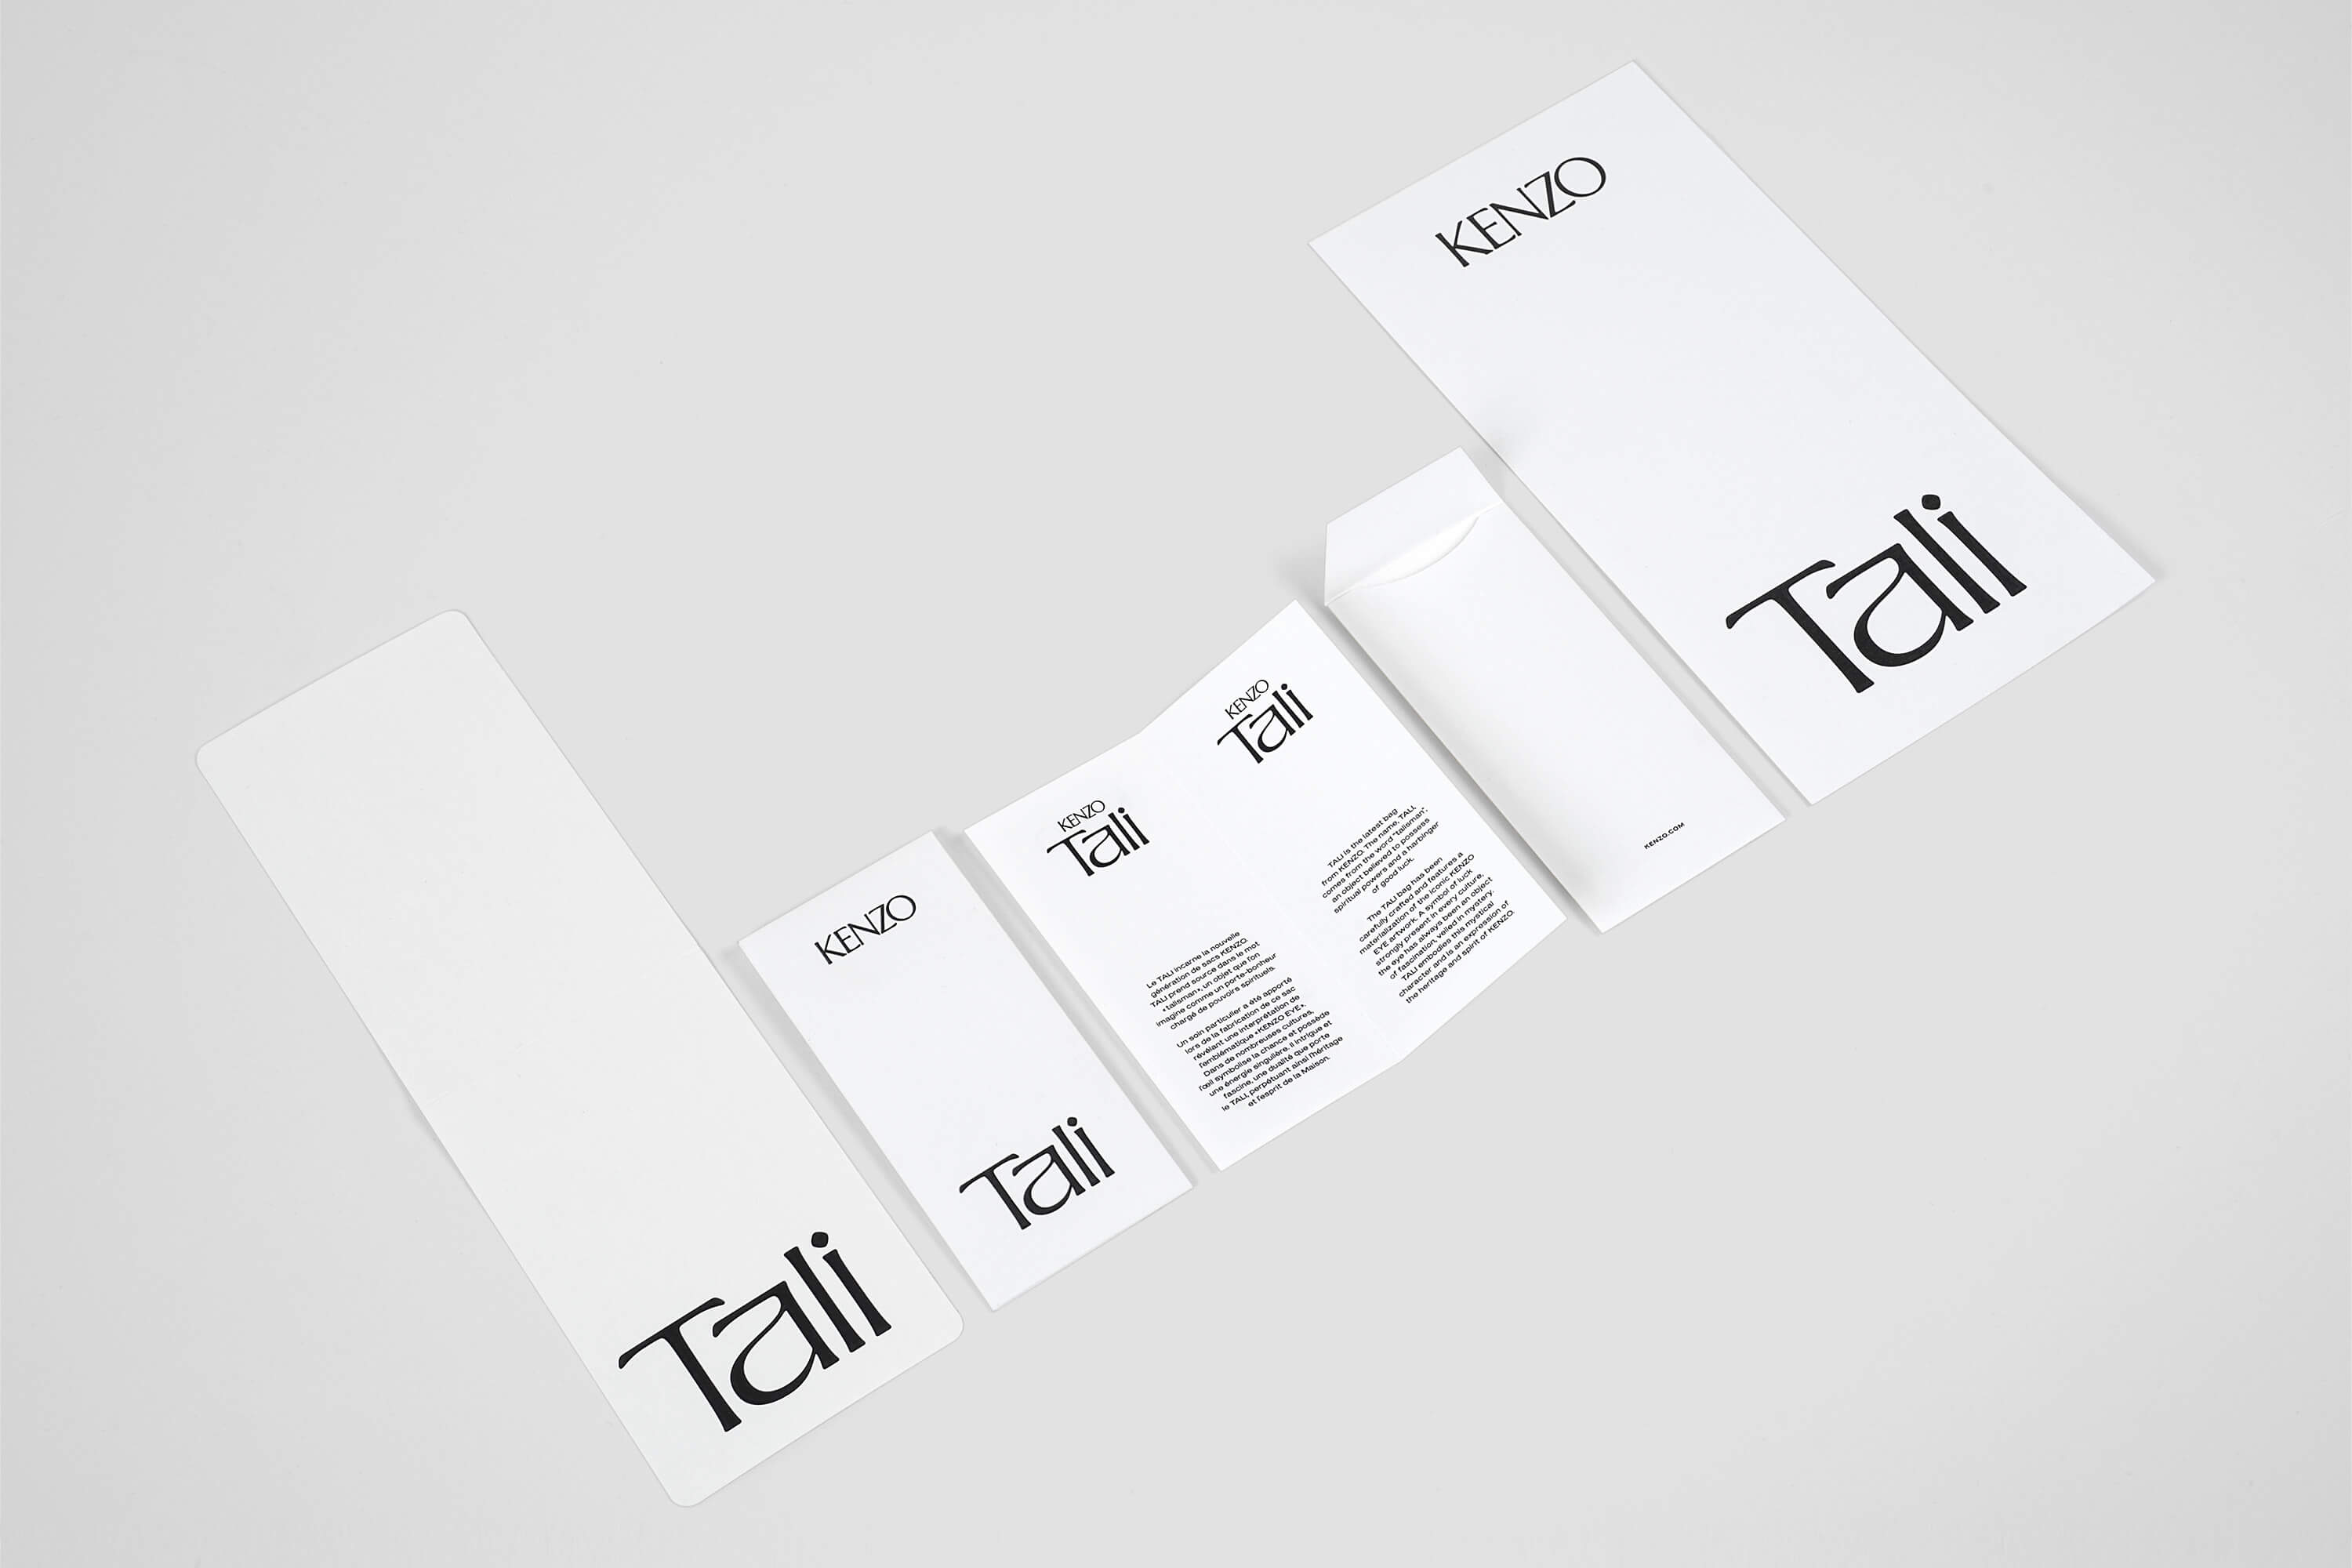 Kenzo Tali catalogue